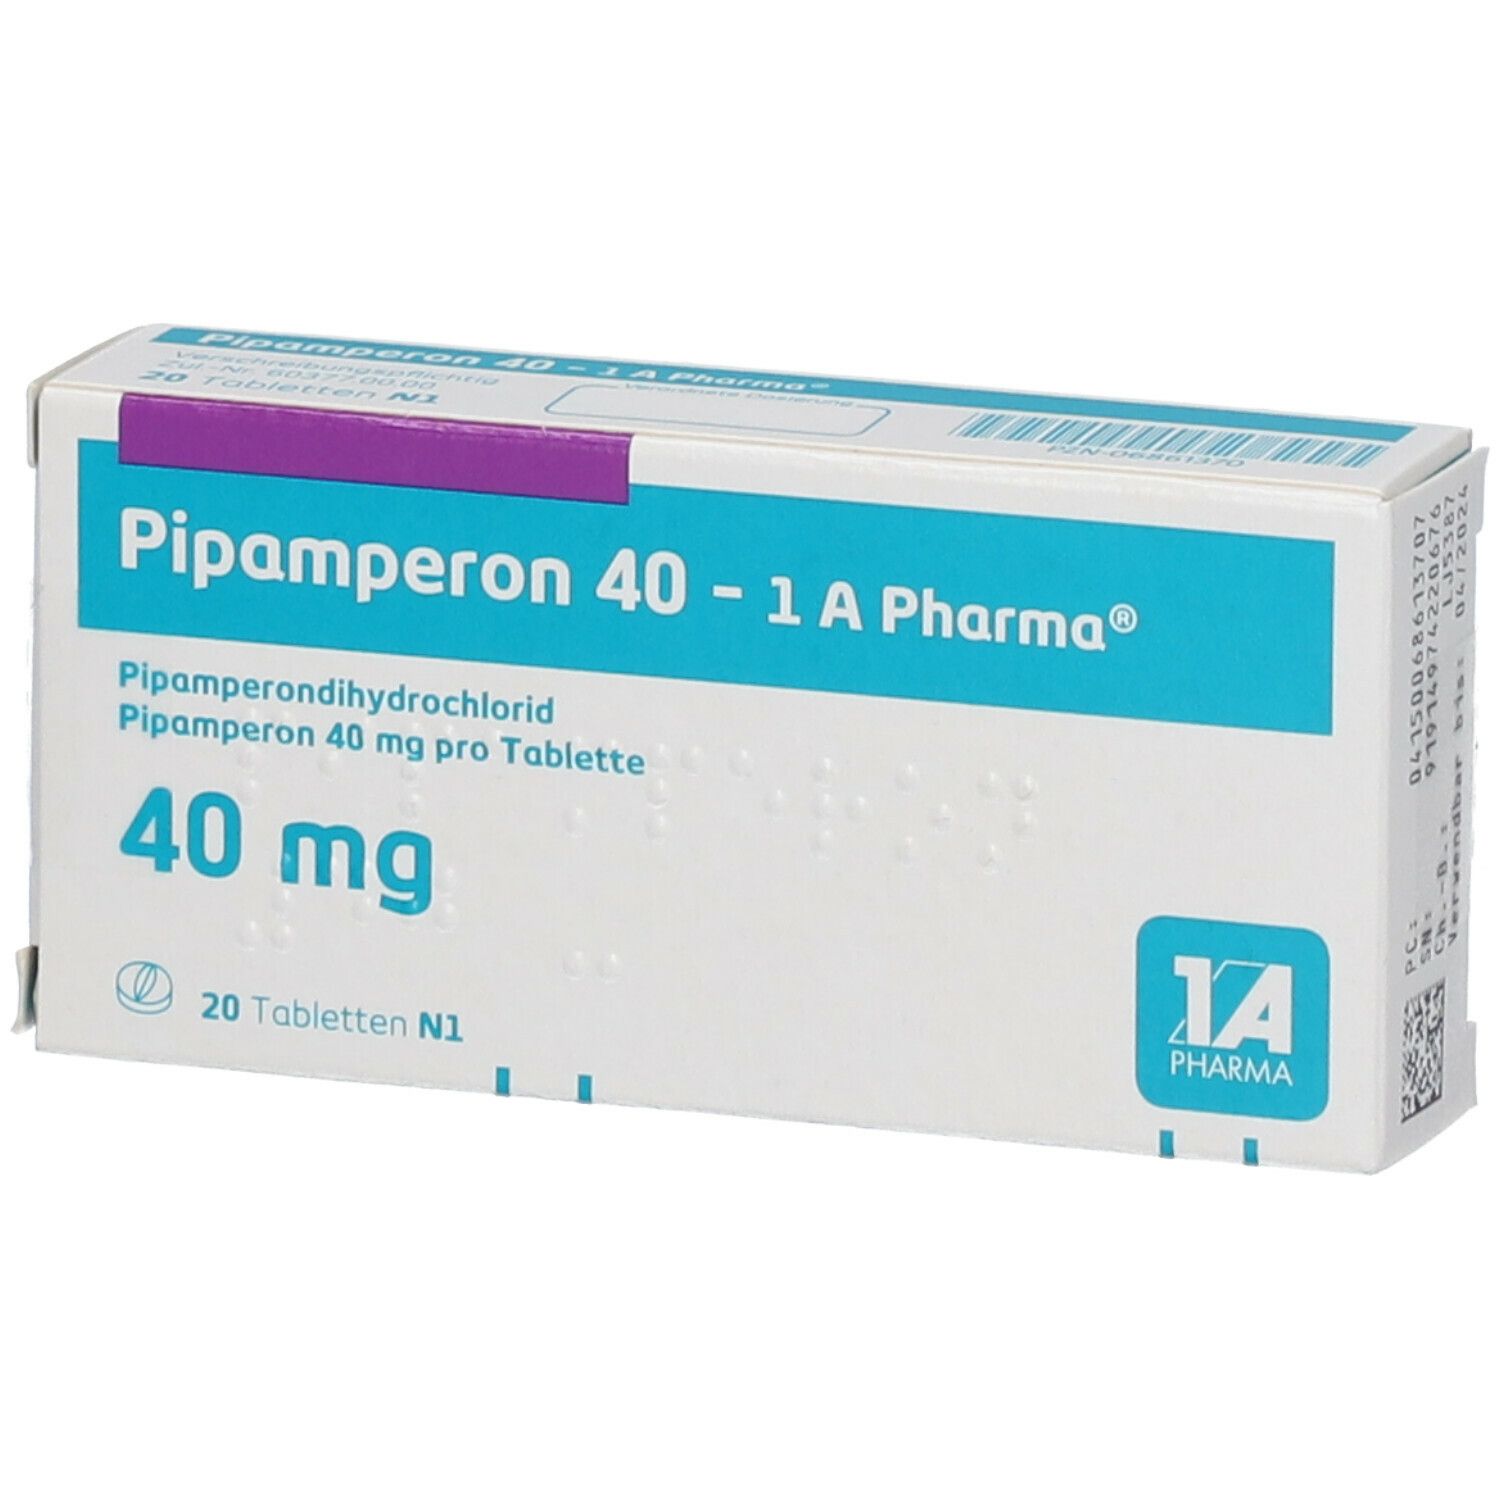 Pipamperon 40 1A Pharma®